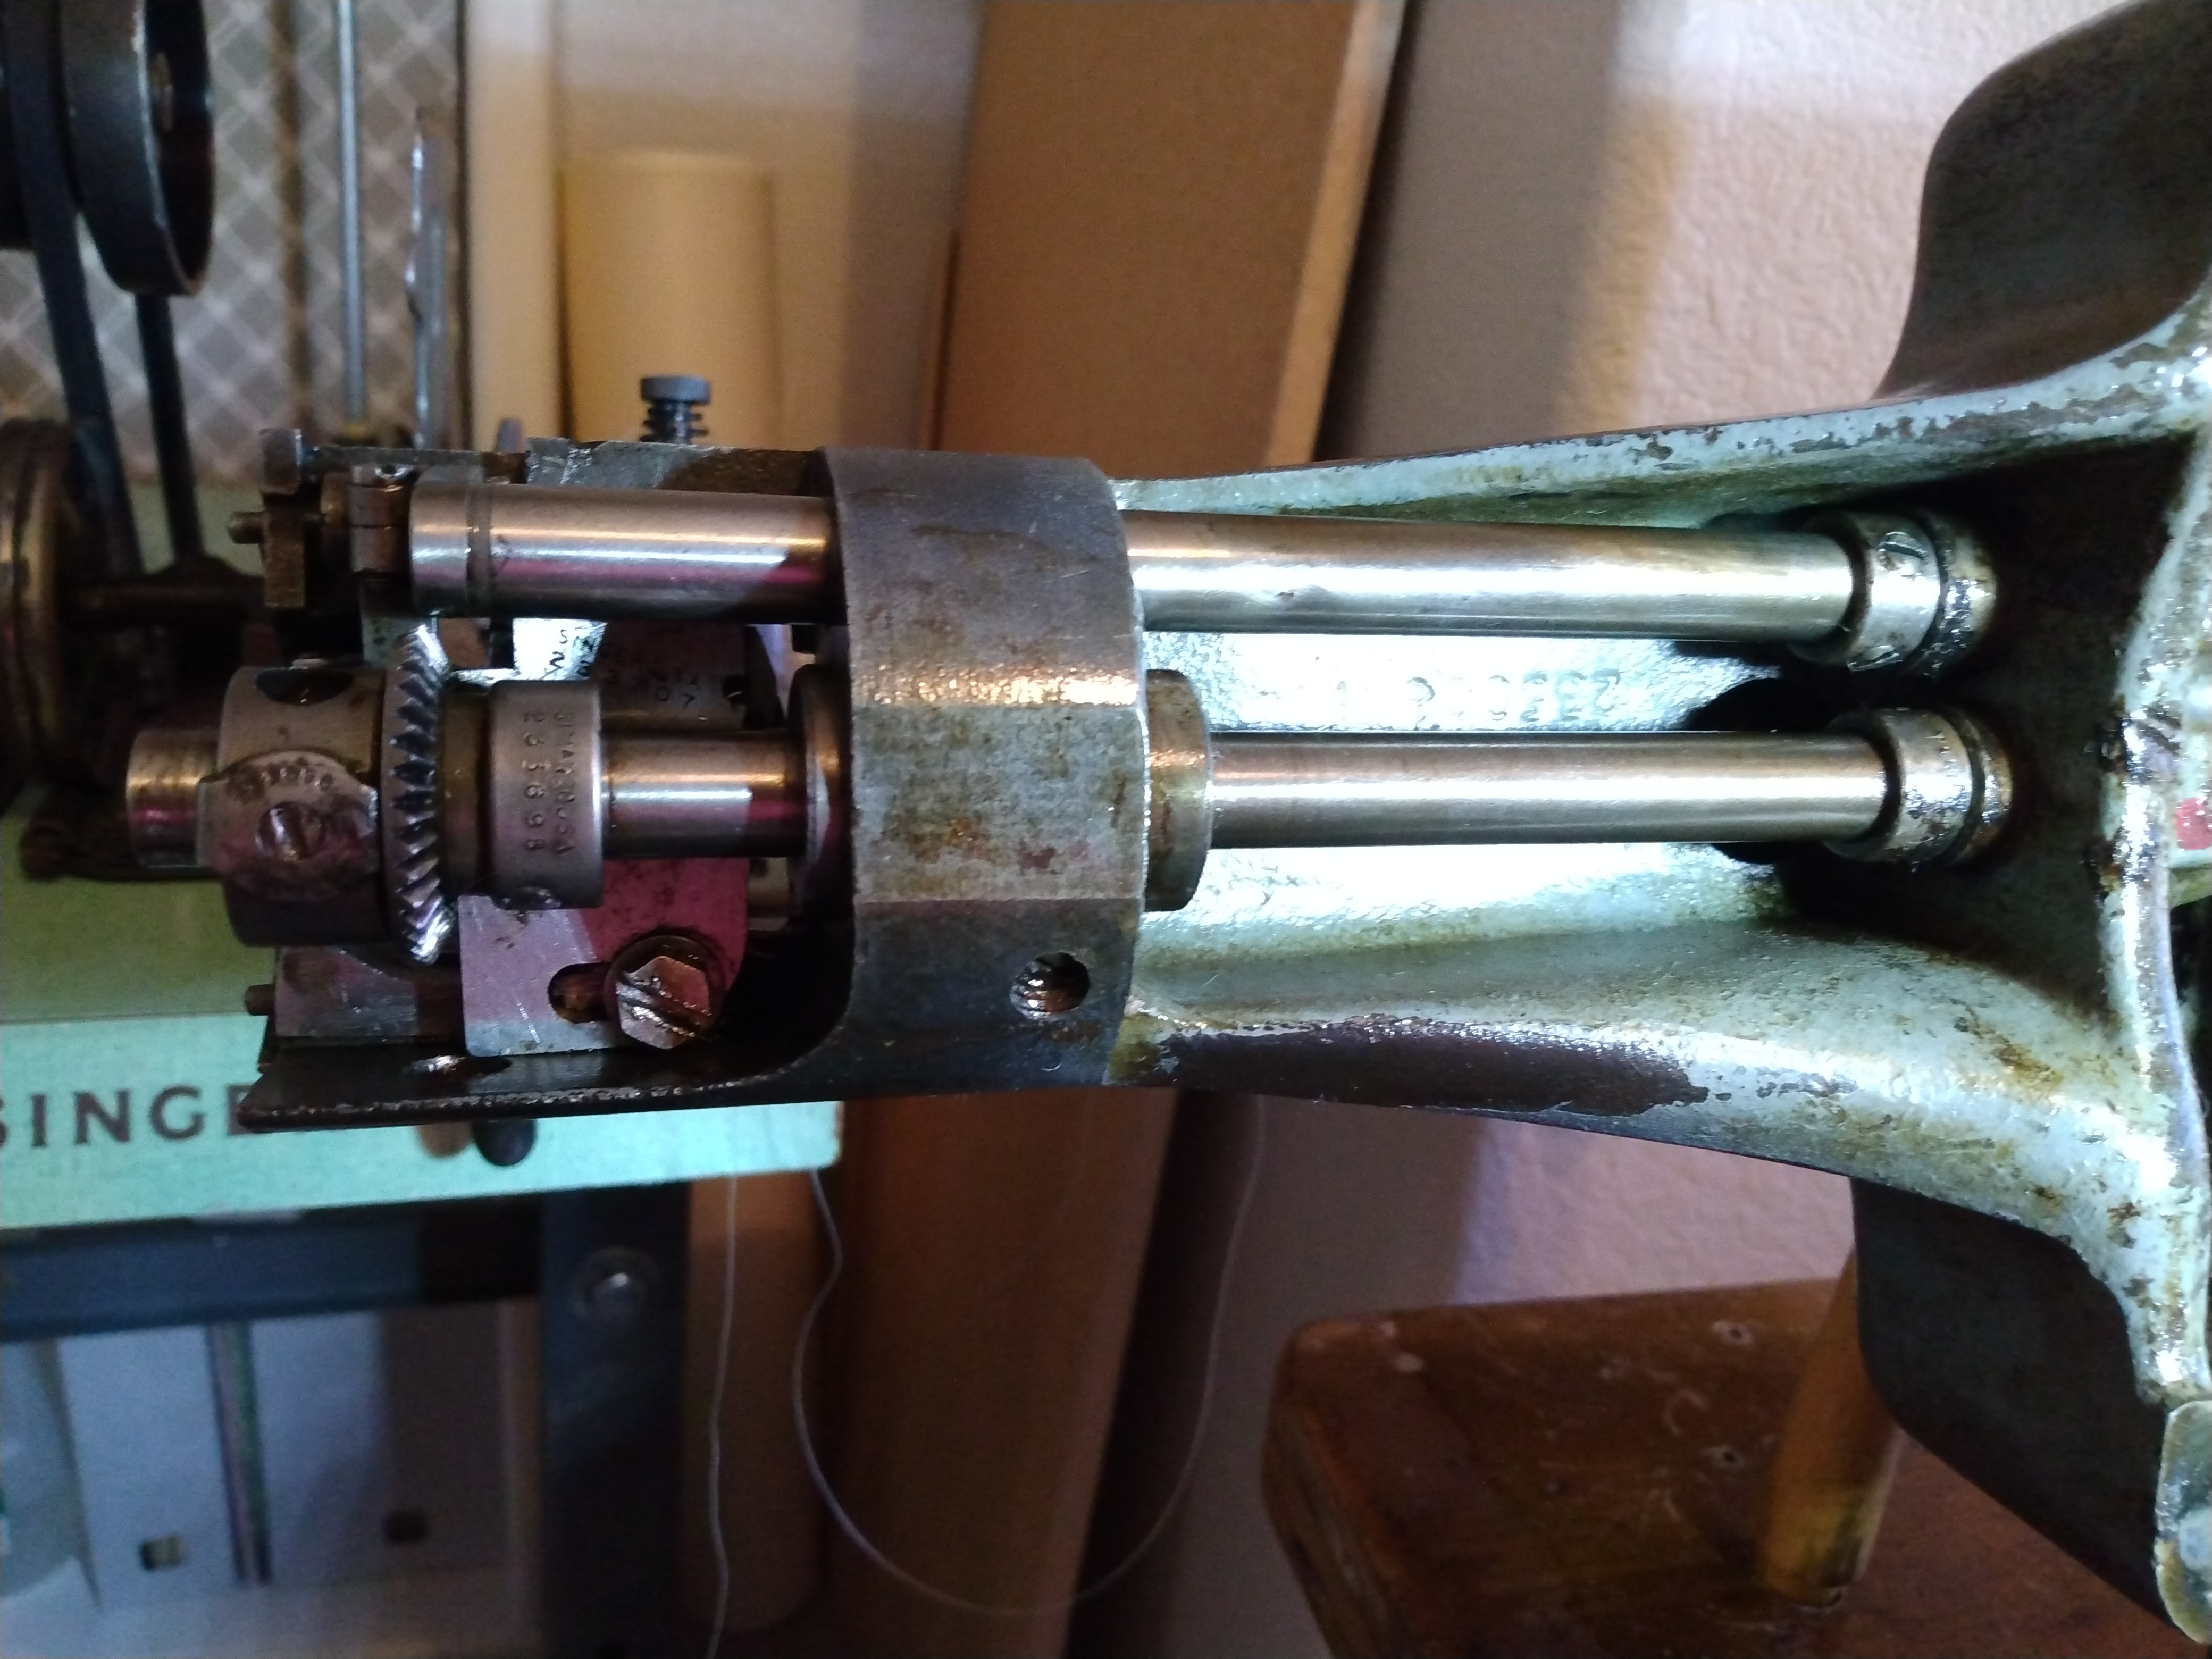 Singer cylinder arm 47w66 sews only backwards after new hook installed and  timed